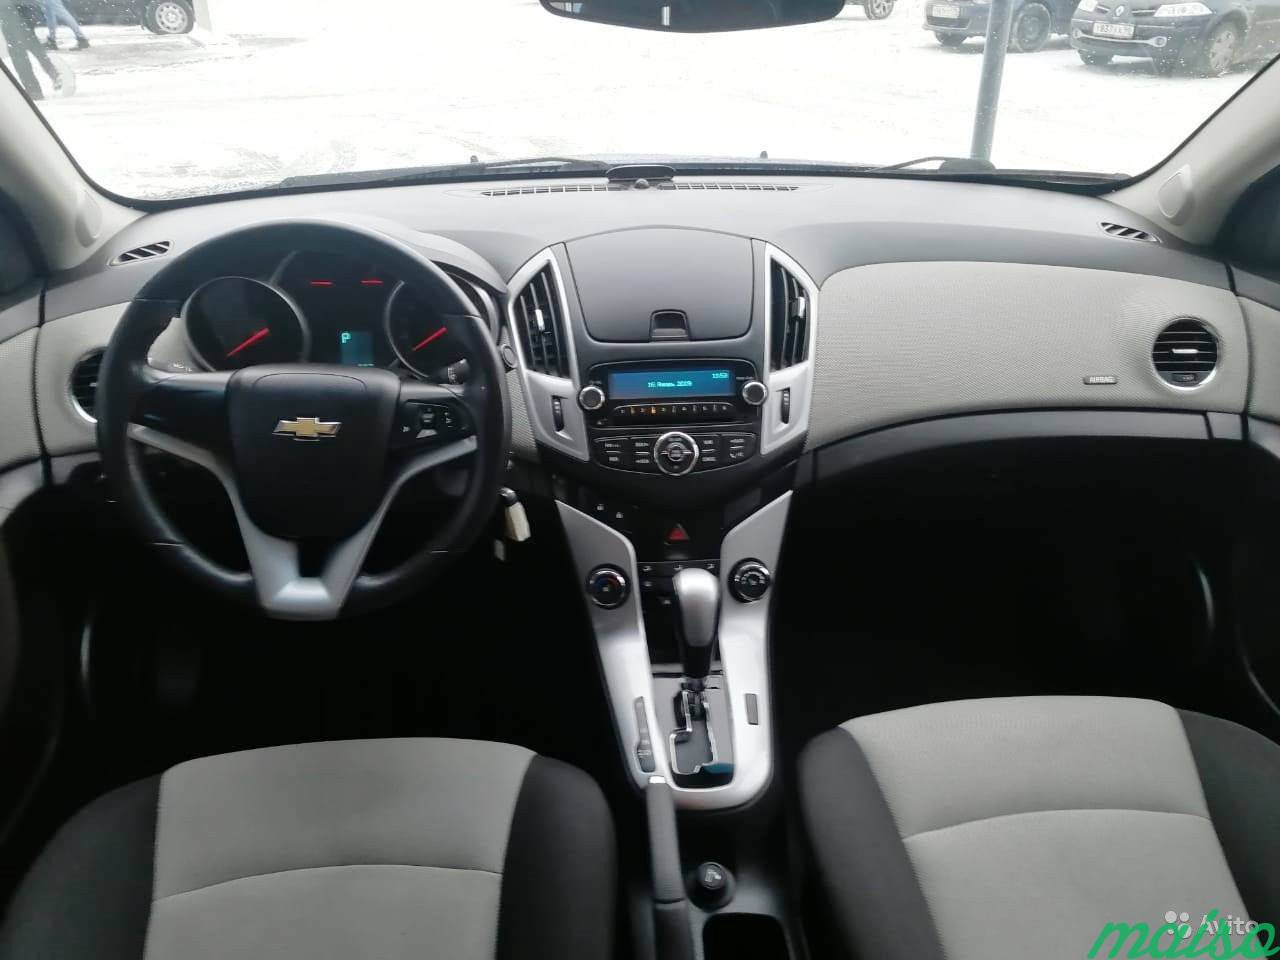 Chevrolet Cruze 1.8 AT, 2013, седан в Санкт-Петербурге. Фото 12